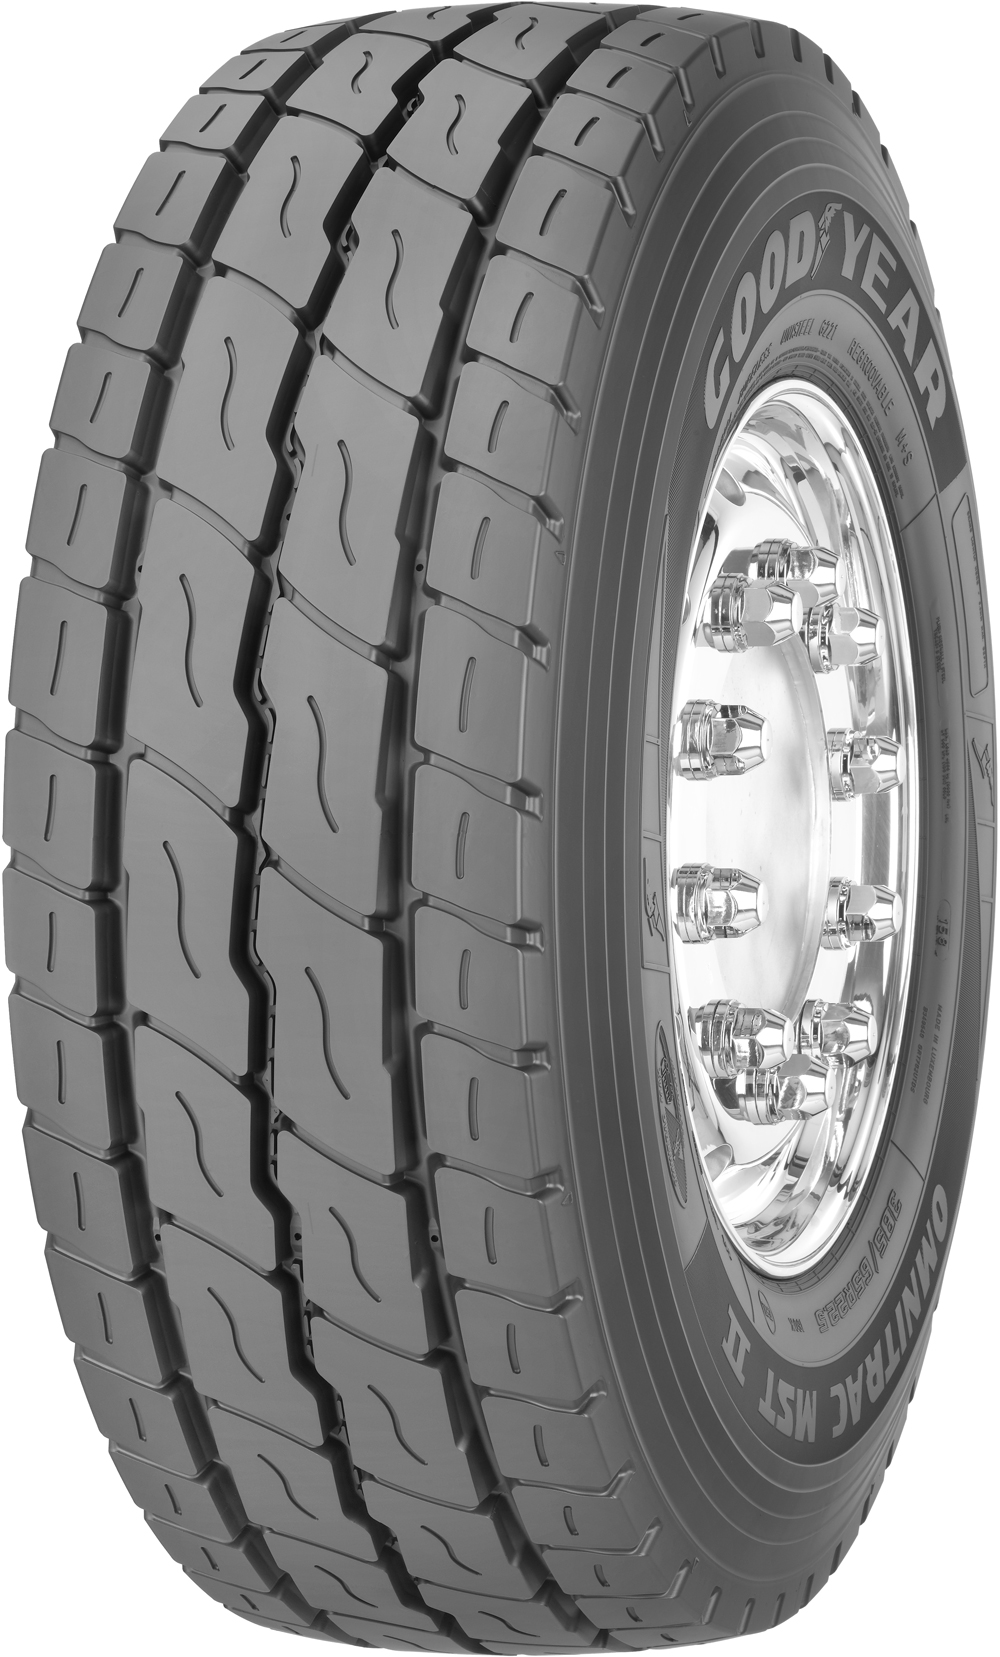 product_type-heavy_tires GOODYEAR OMNITRAC MST II 20 TL 445/65 R22.5 169K